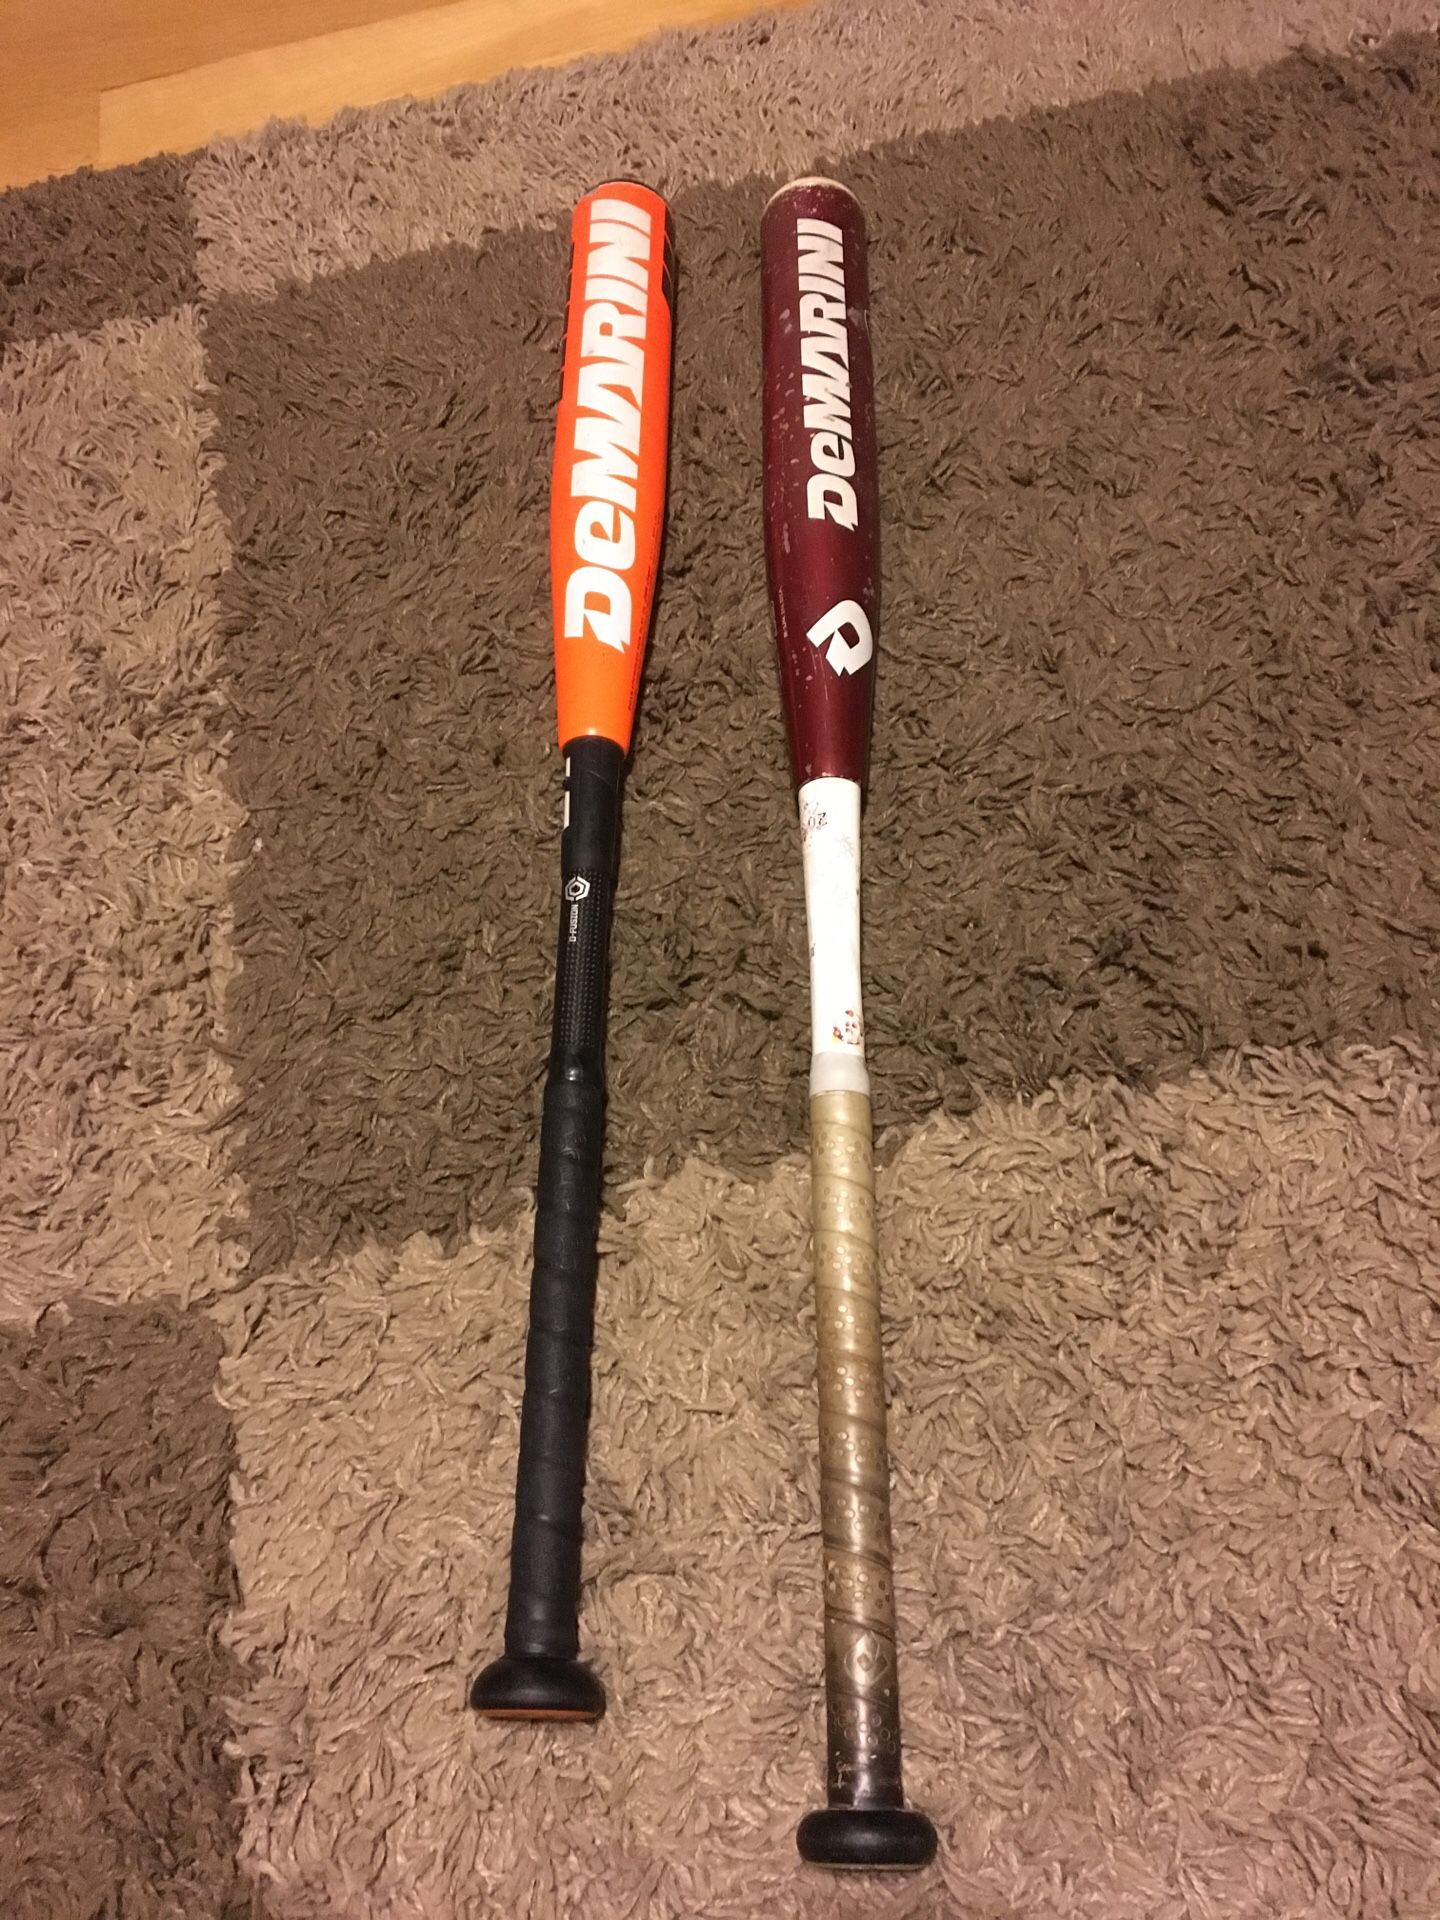 Baseball bats - 2 DeMarini